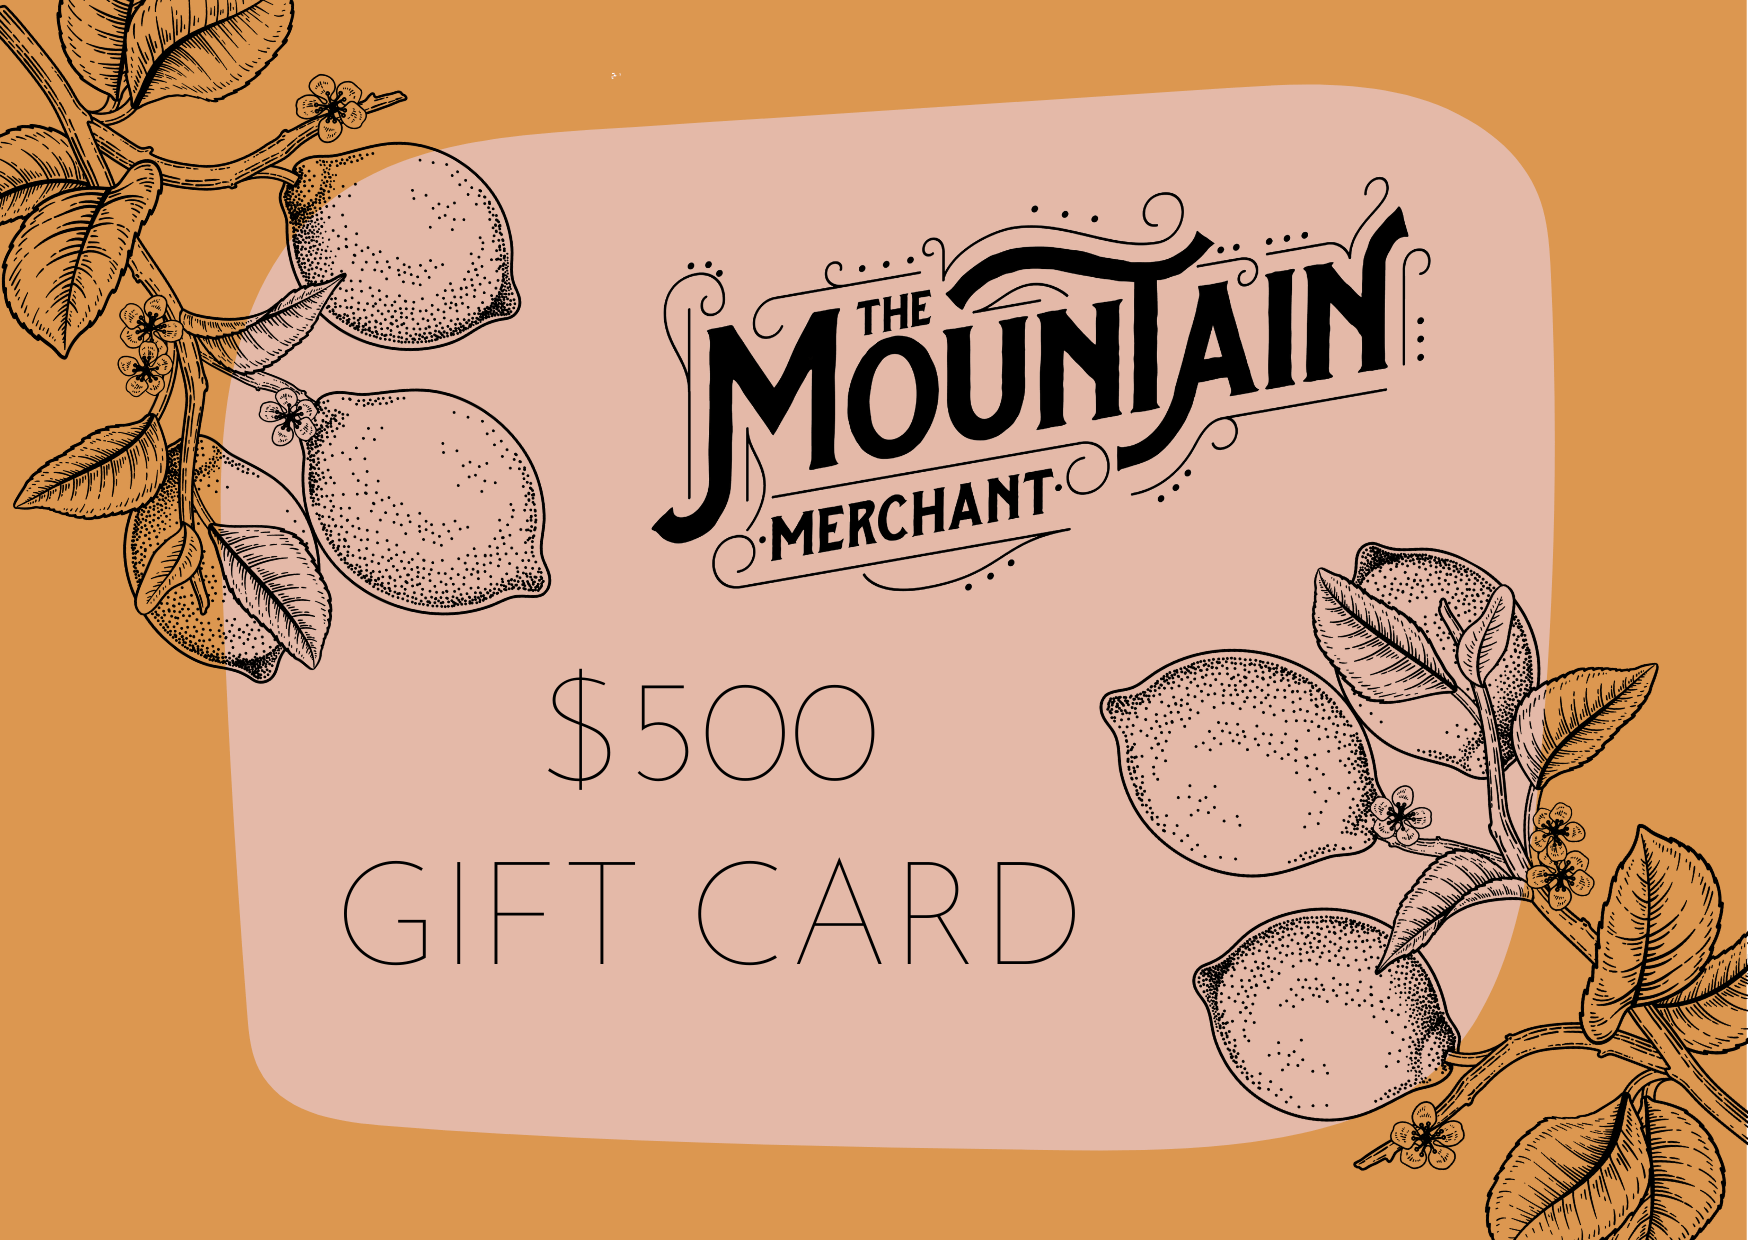 The Mountain Merchant - Gift Card $500 -The Mountain Merchant -The Mountain Merchant